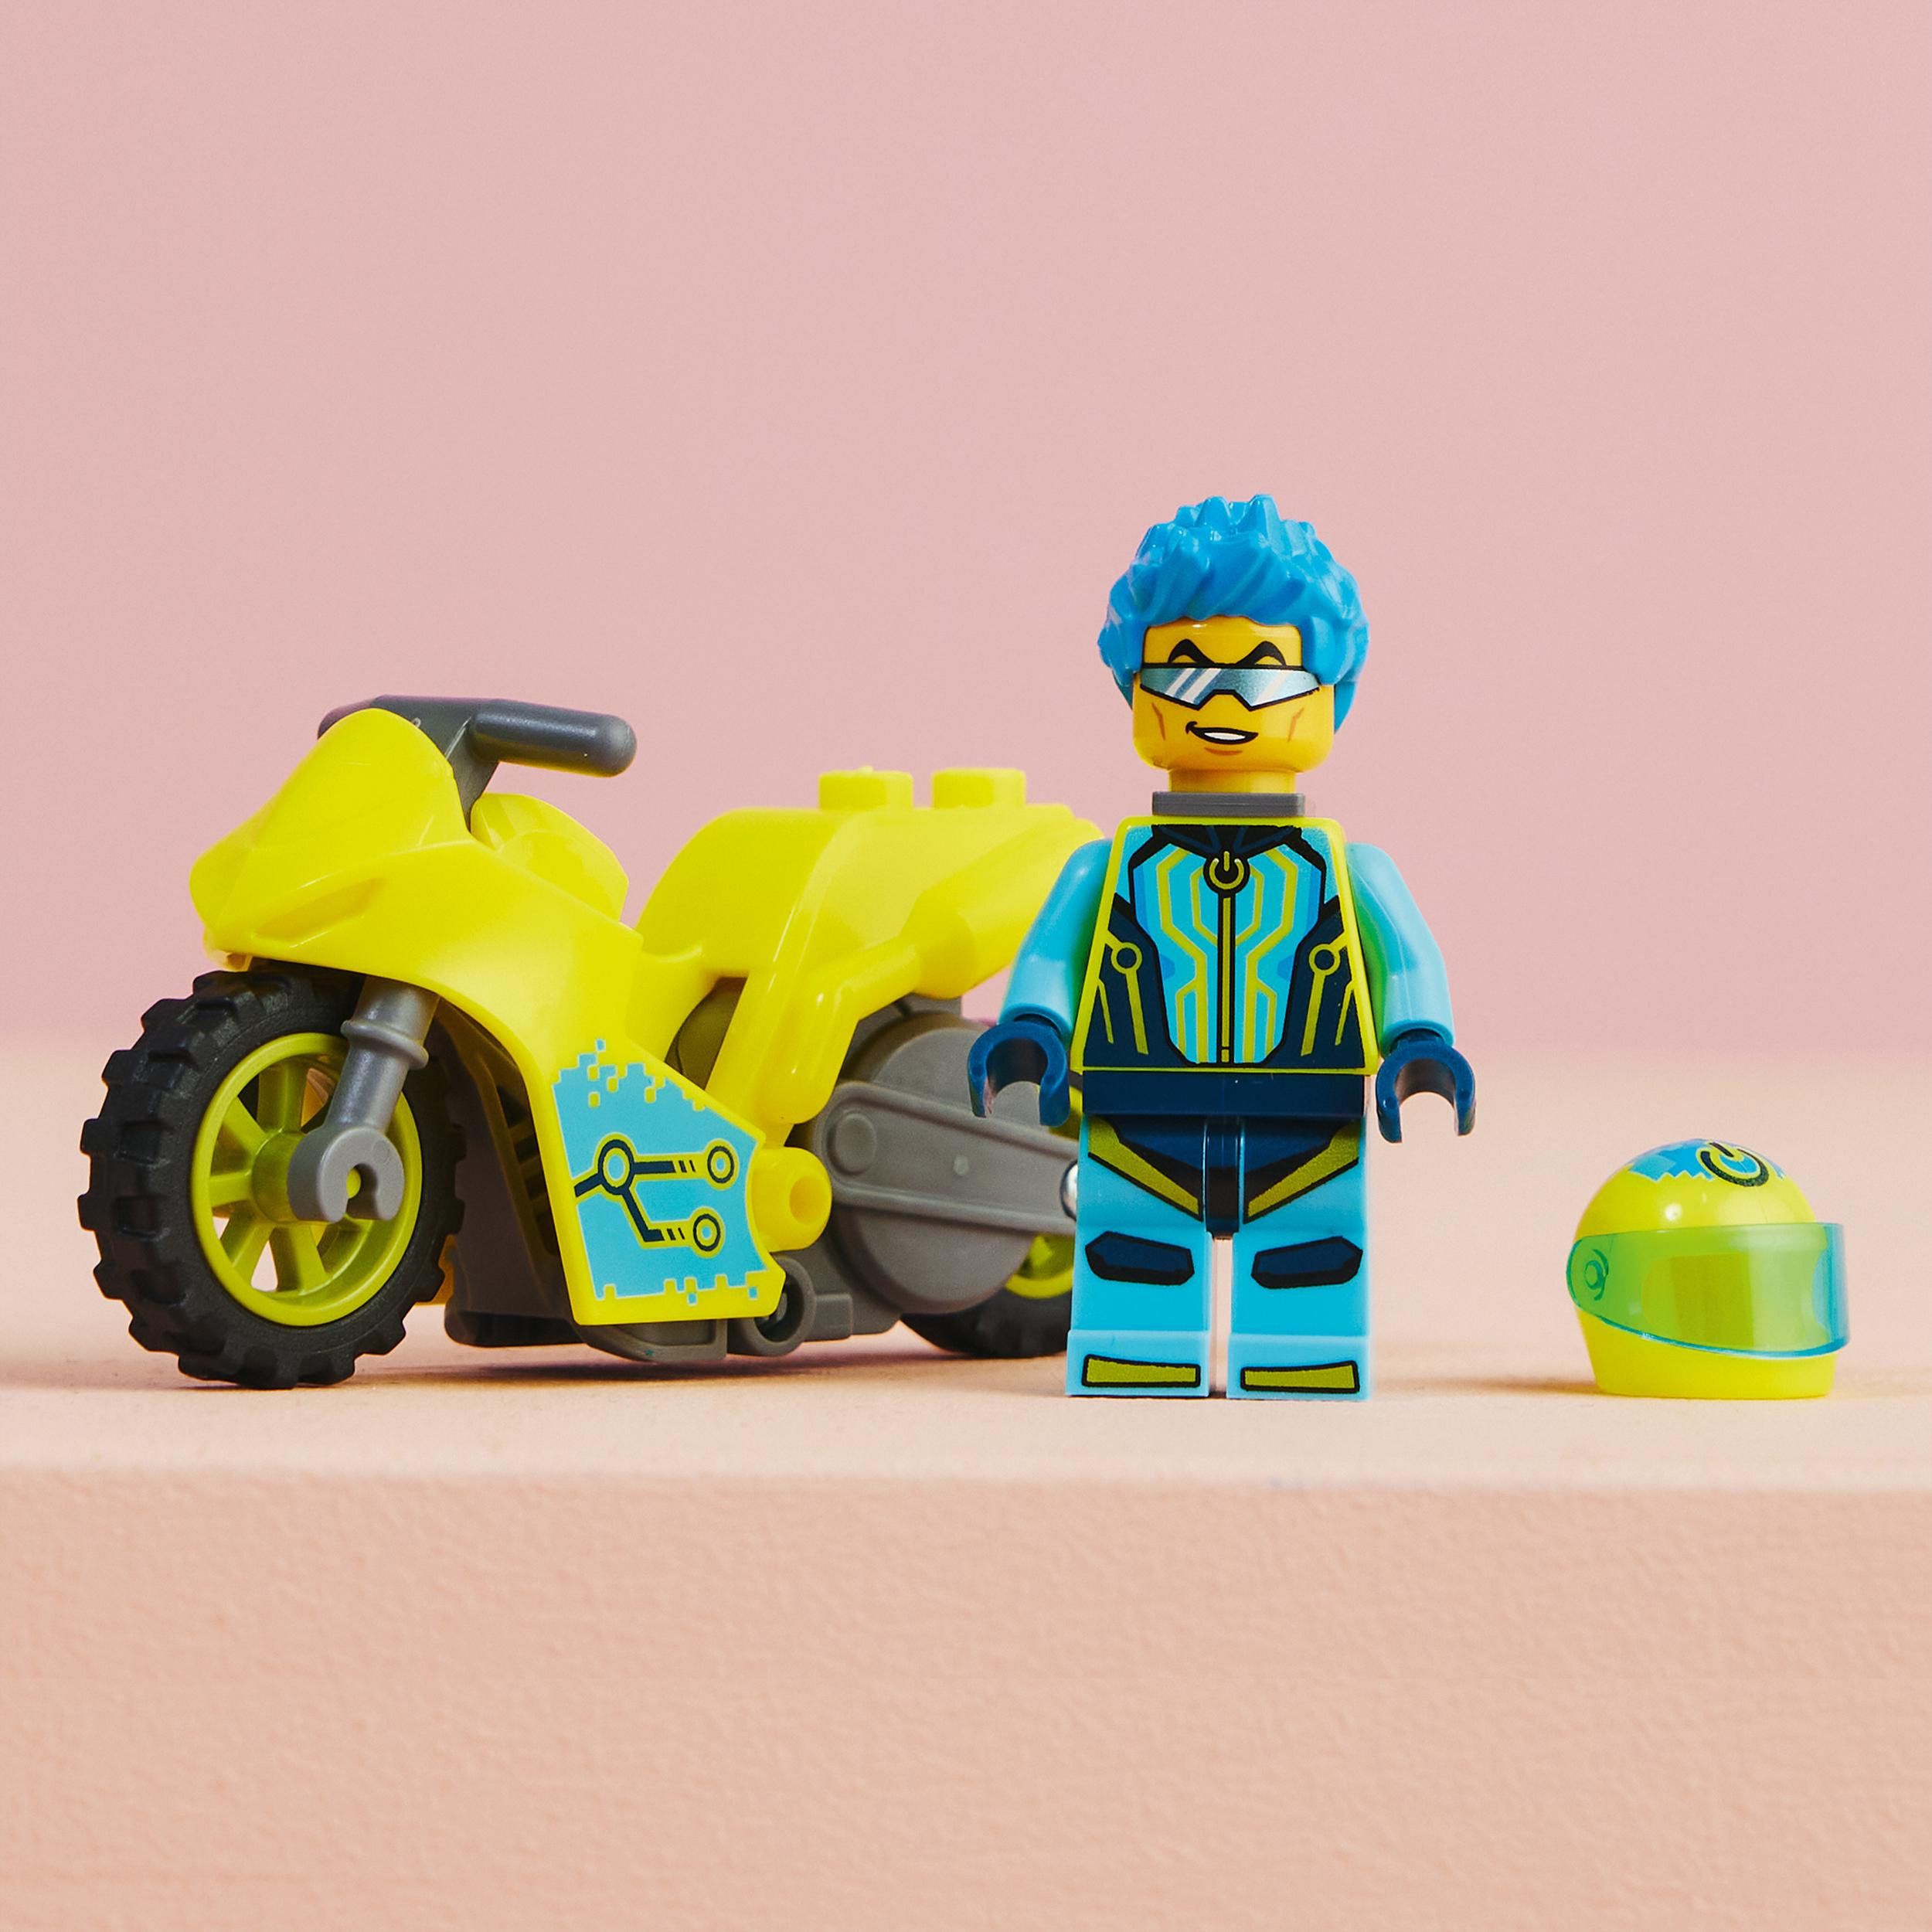 LEGO City Mehrfarbig Bausatz, Cyber-Stuntbike 60358